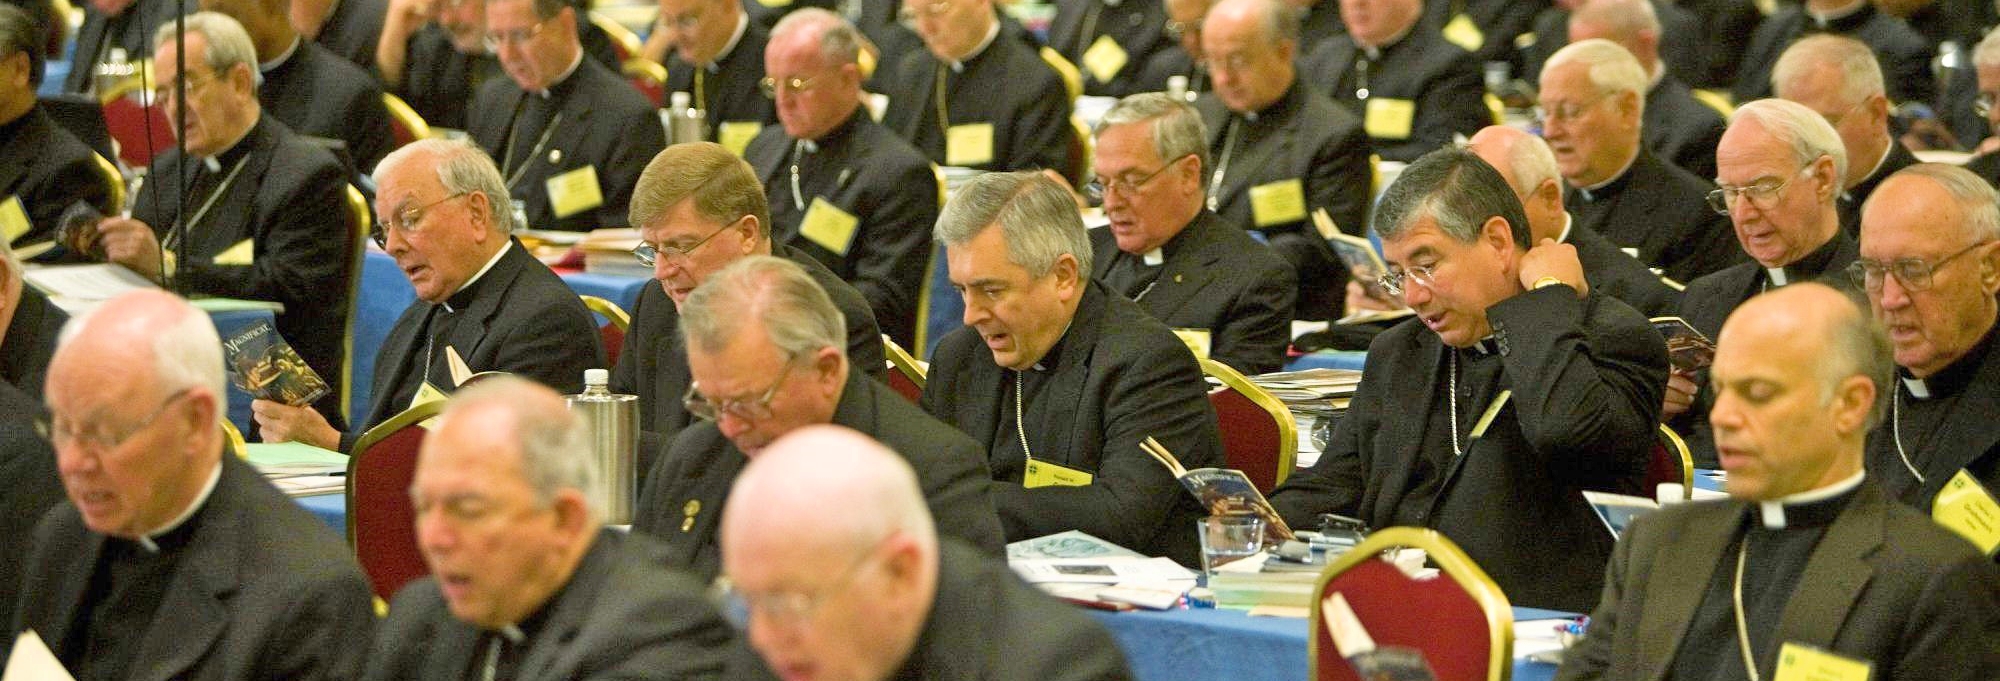 U.S. Conference of Catholic Bishops